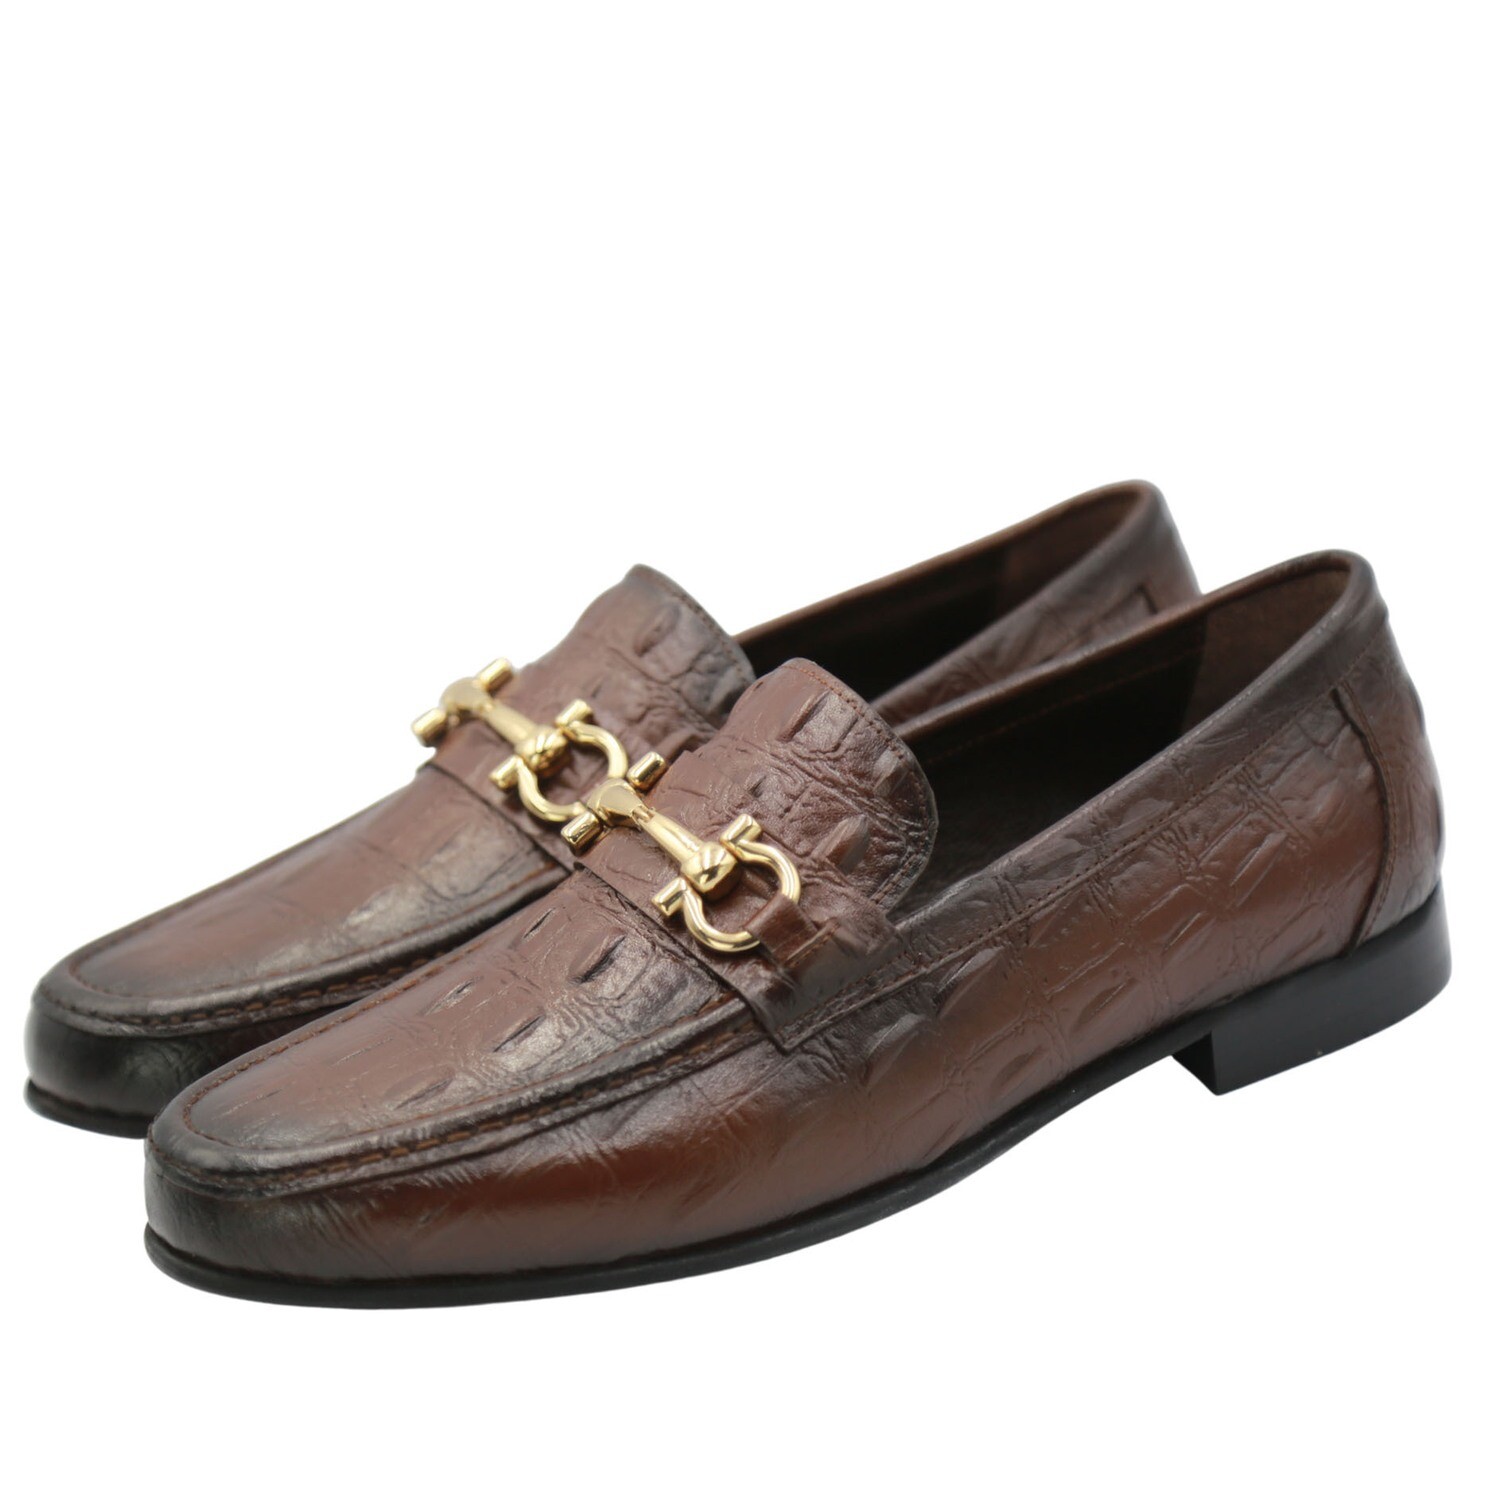 Men's Comfortable Formal Leather Shoe